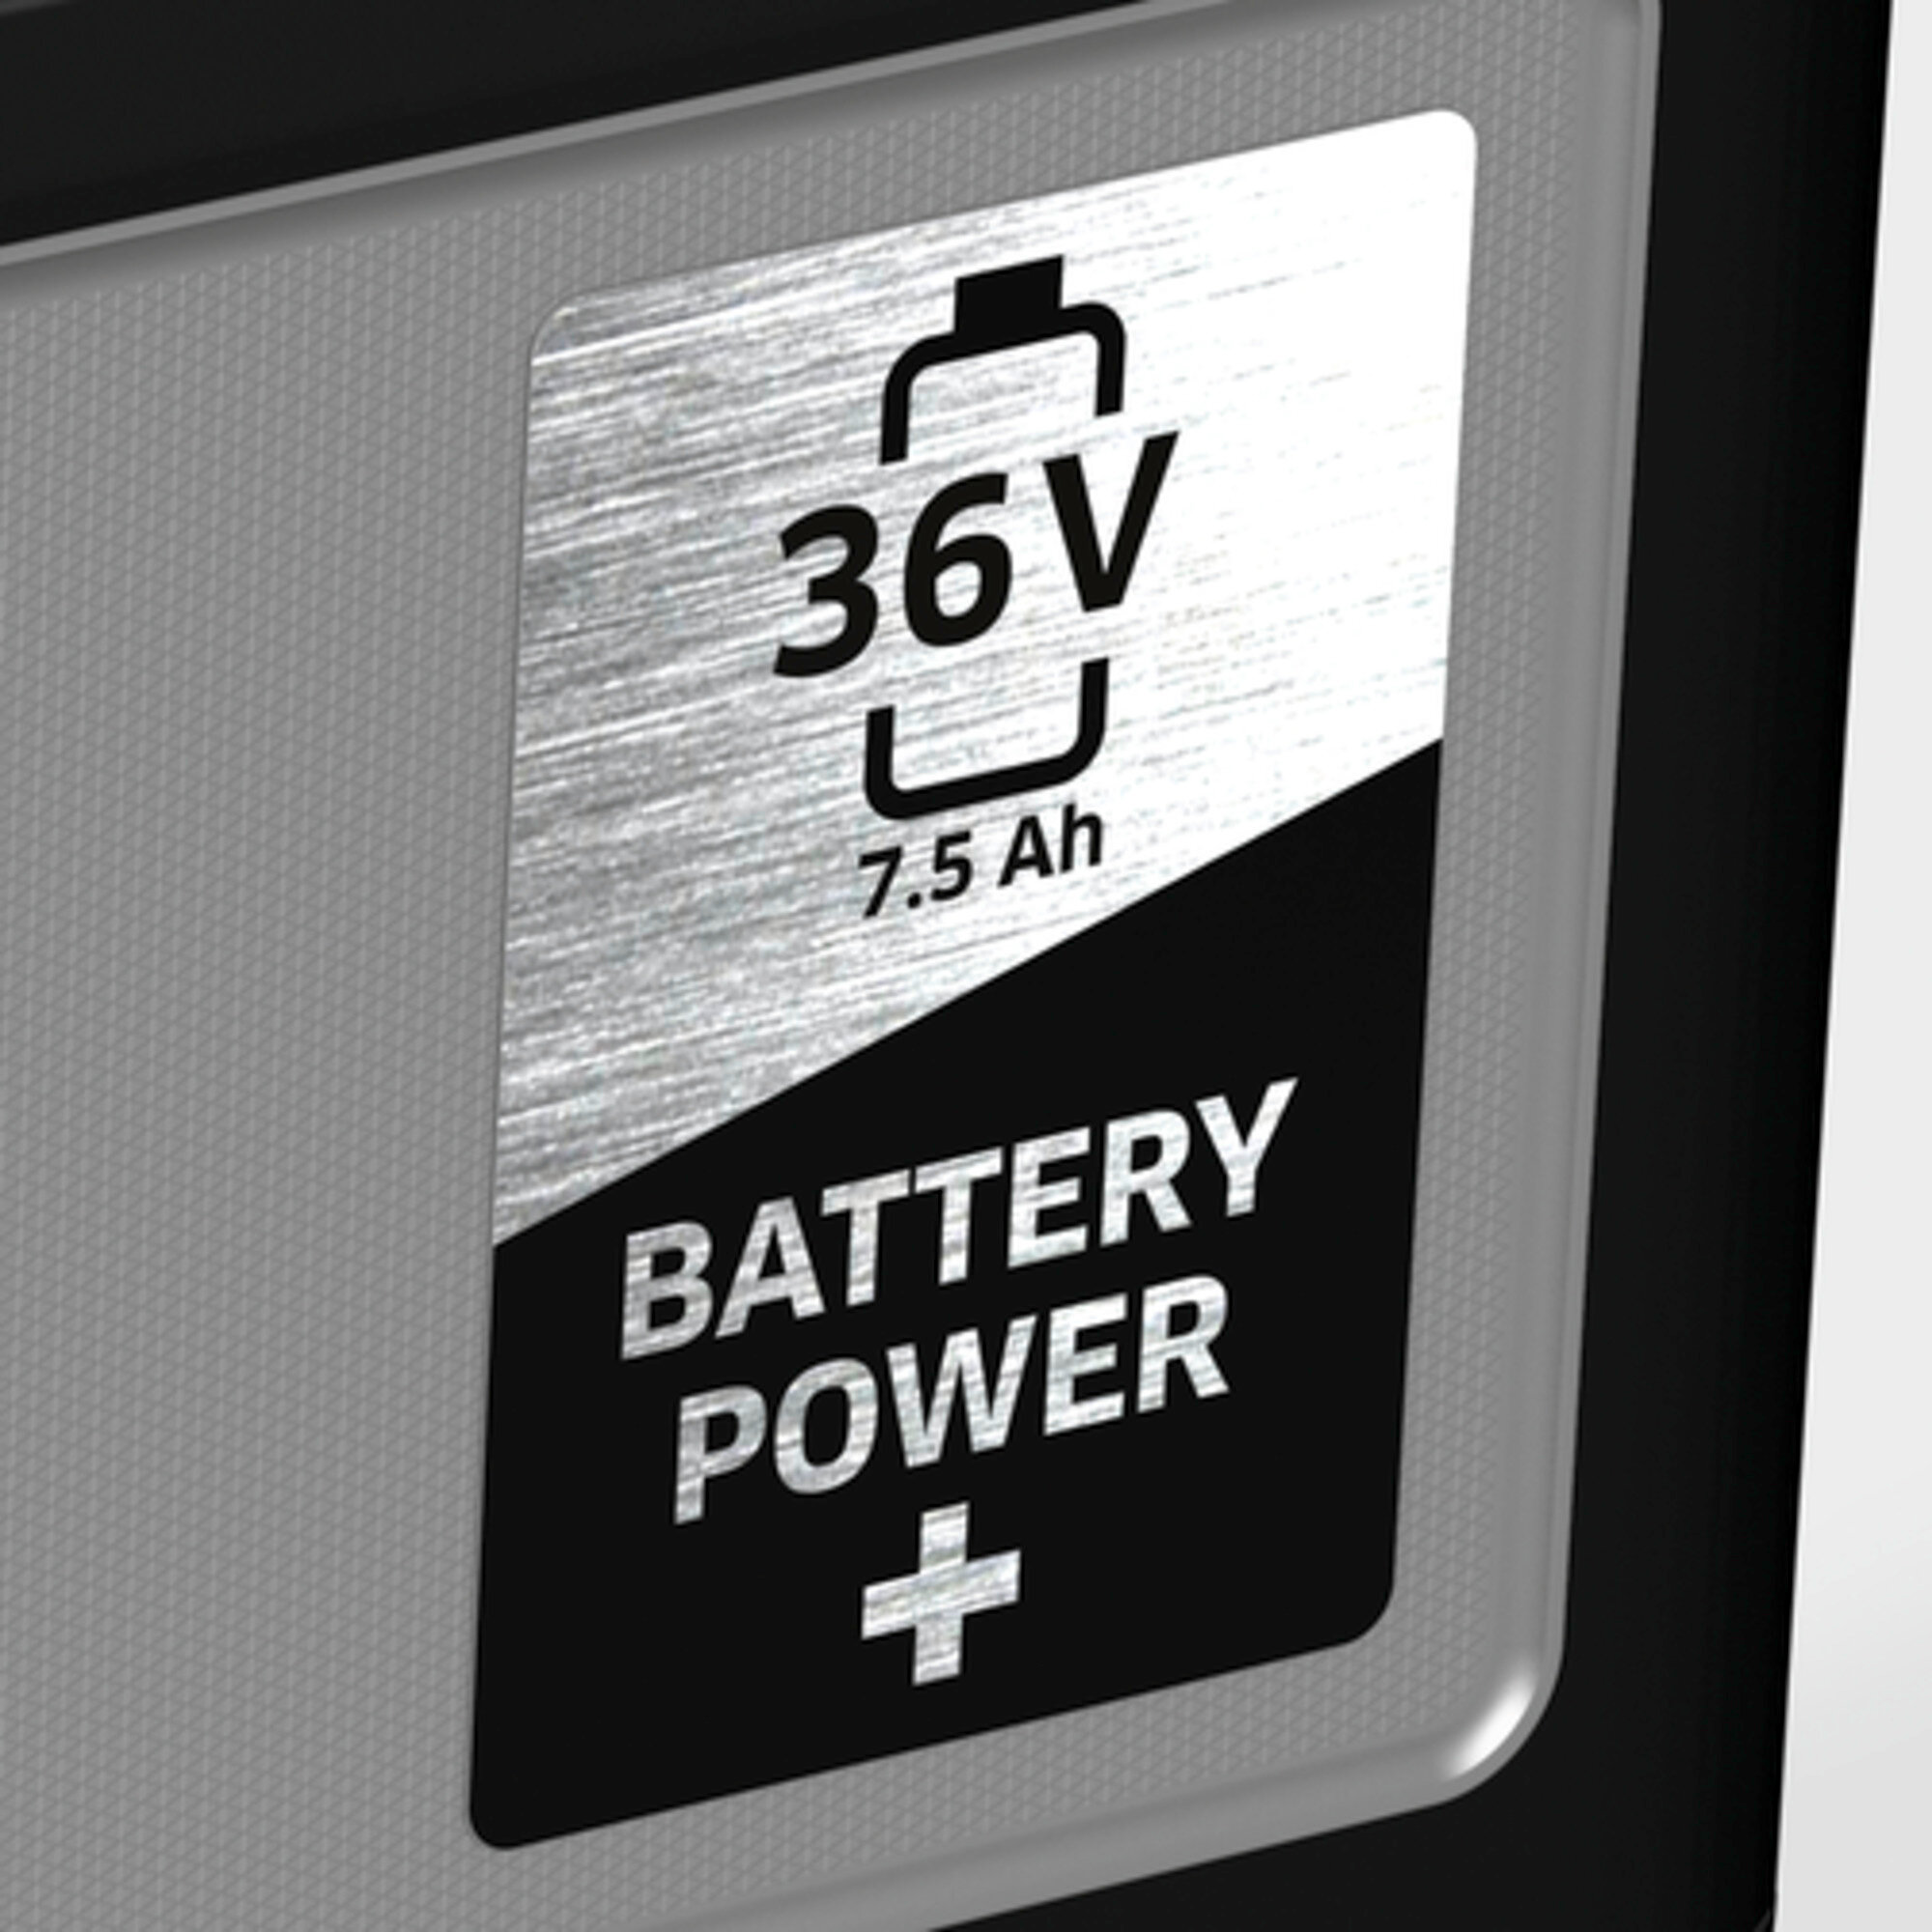  Battery Power+ 36/75: Systém 36 V vymeniteľných batérií Battery Power Kärcher